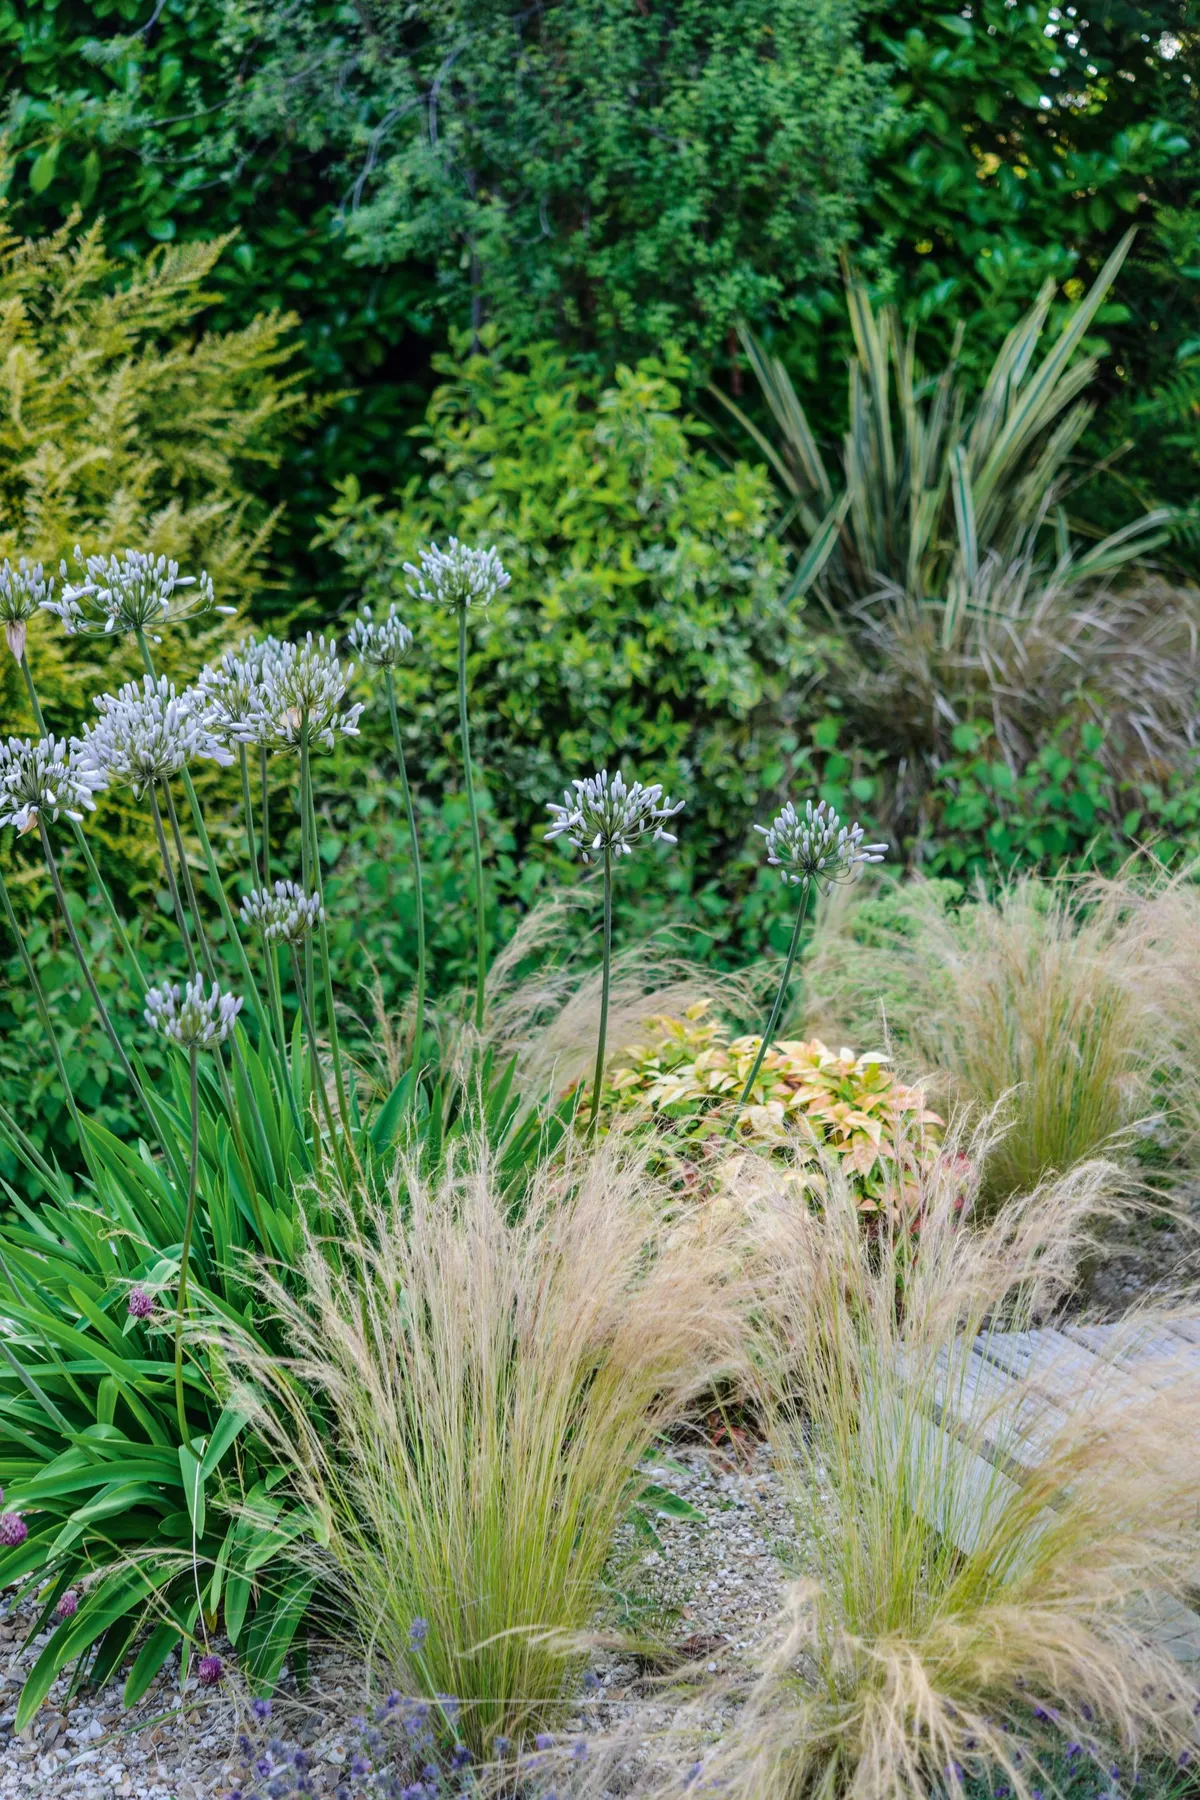 Agapanthus ‘Windsor Grey’ and Stipa tenuissima in Dorset gravel garden